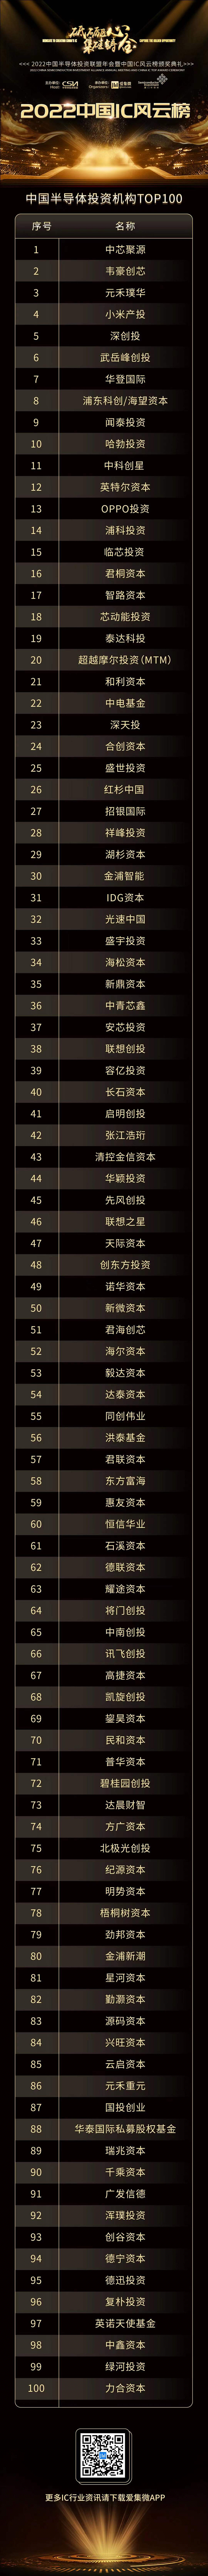 leyu乐鱼VIP会员奖励【集微发布】中国IC风云榜“中国半导体投资机构TOP100”榜单出炉